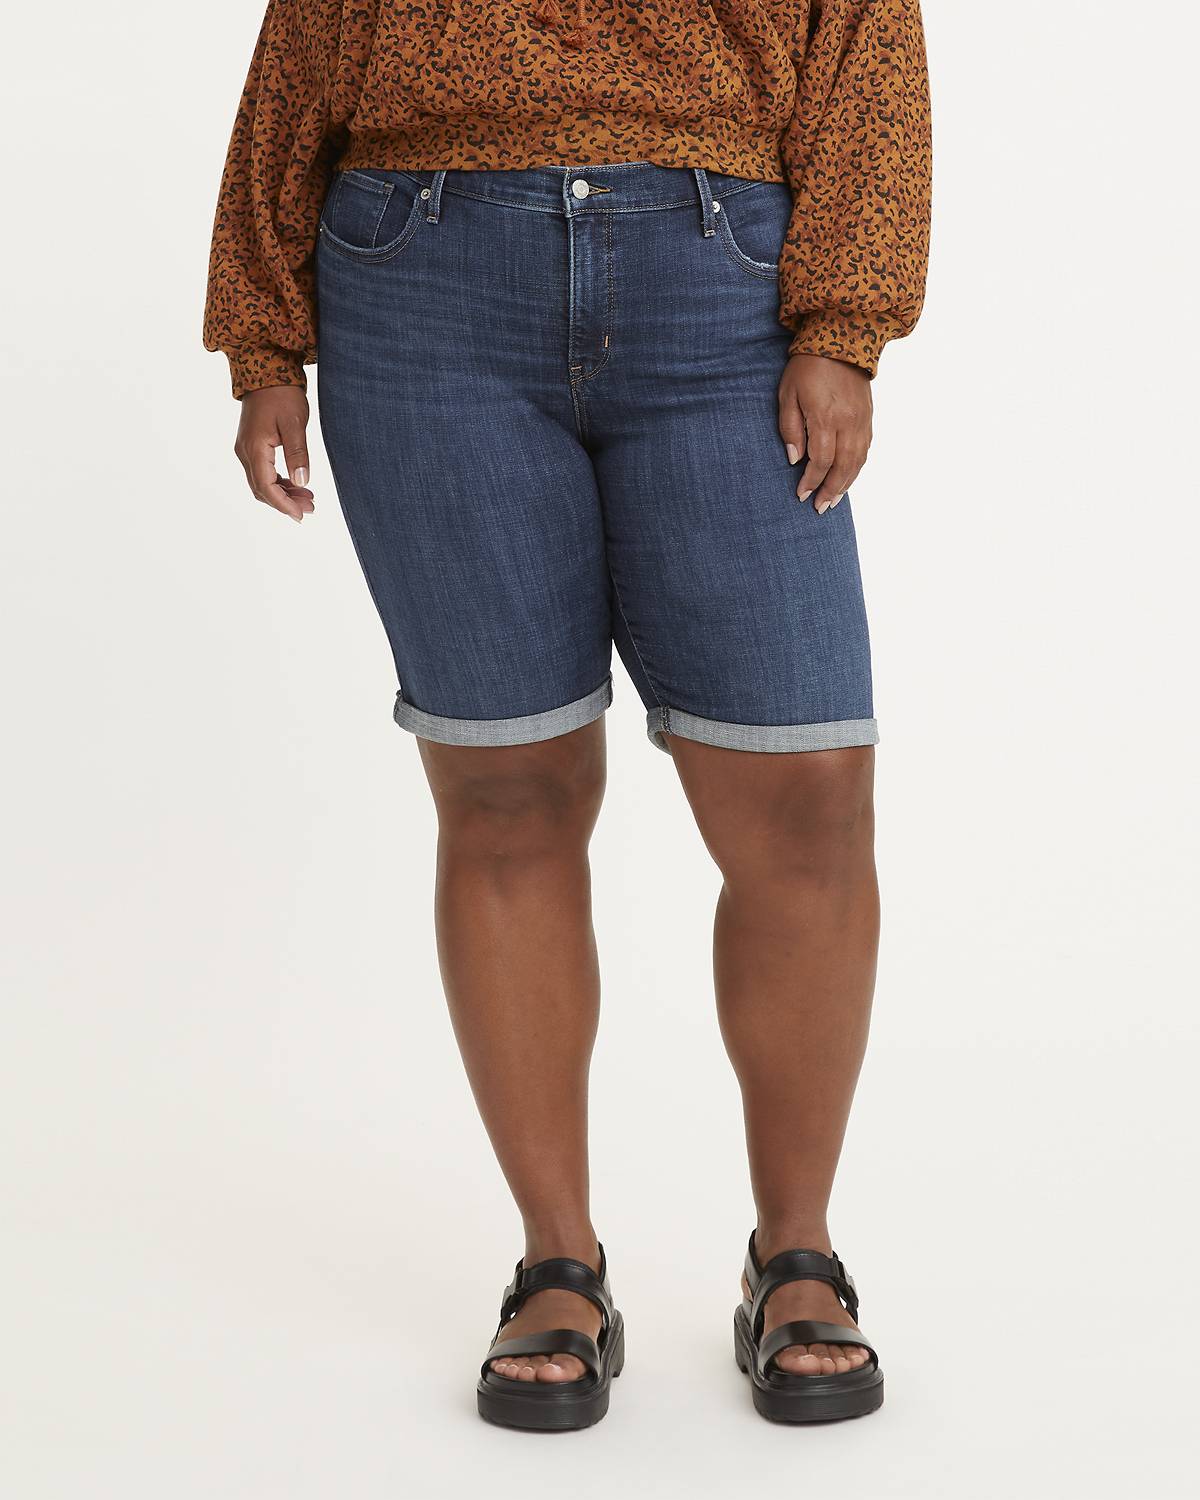 Model wearing plus-sized shorts